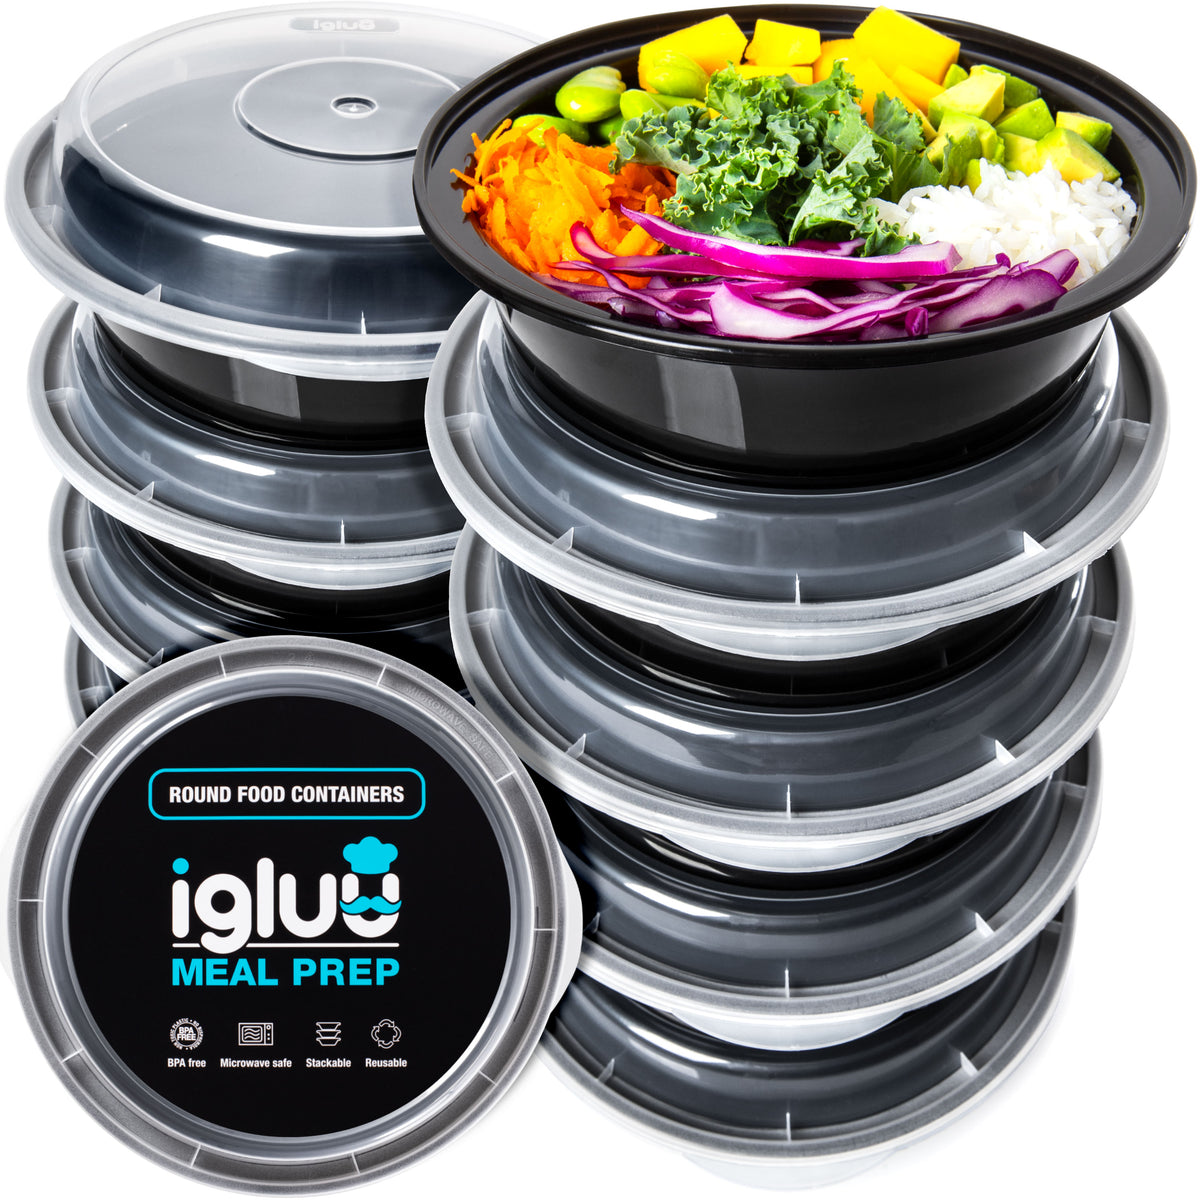 Igluu Meal Prep Reviews - Read 369 Genuine Customer Reviews